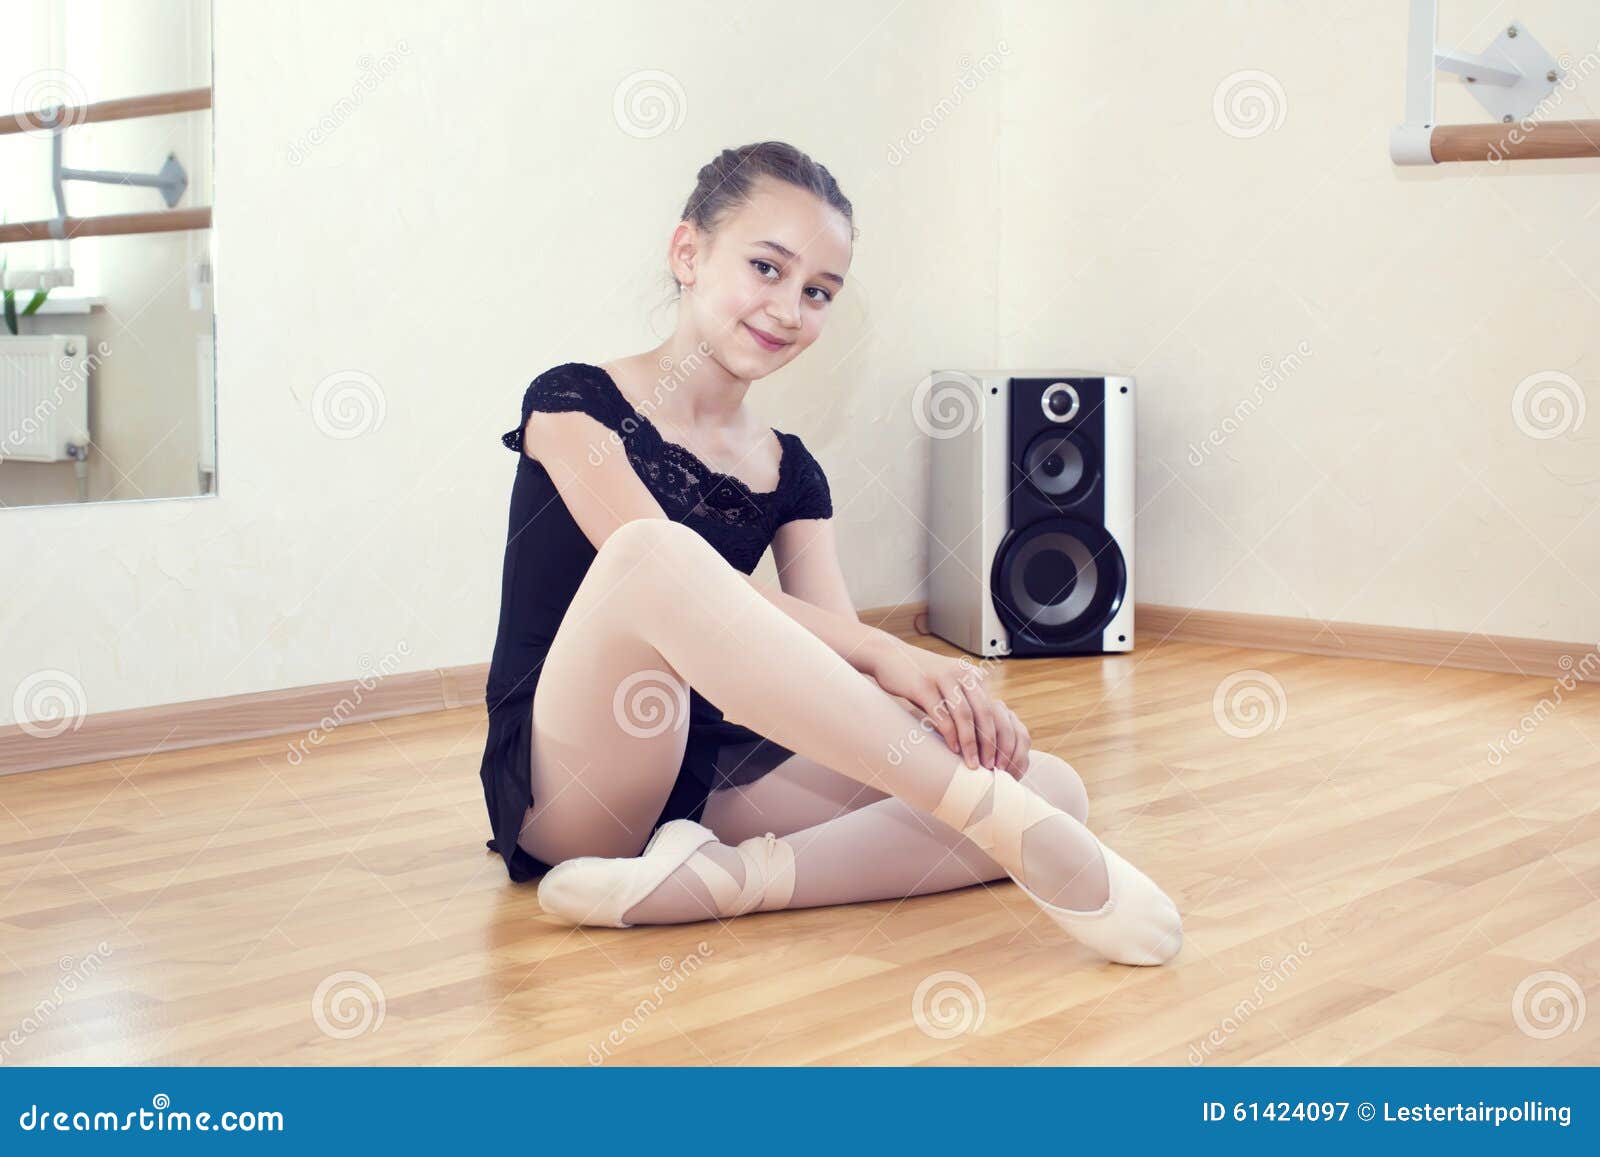 A little girl dressed as a ballerina in ballet